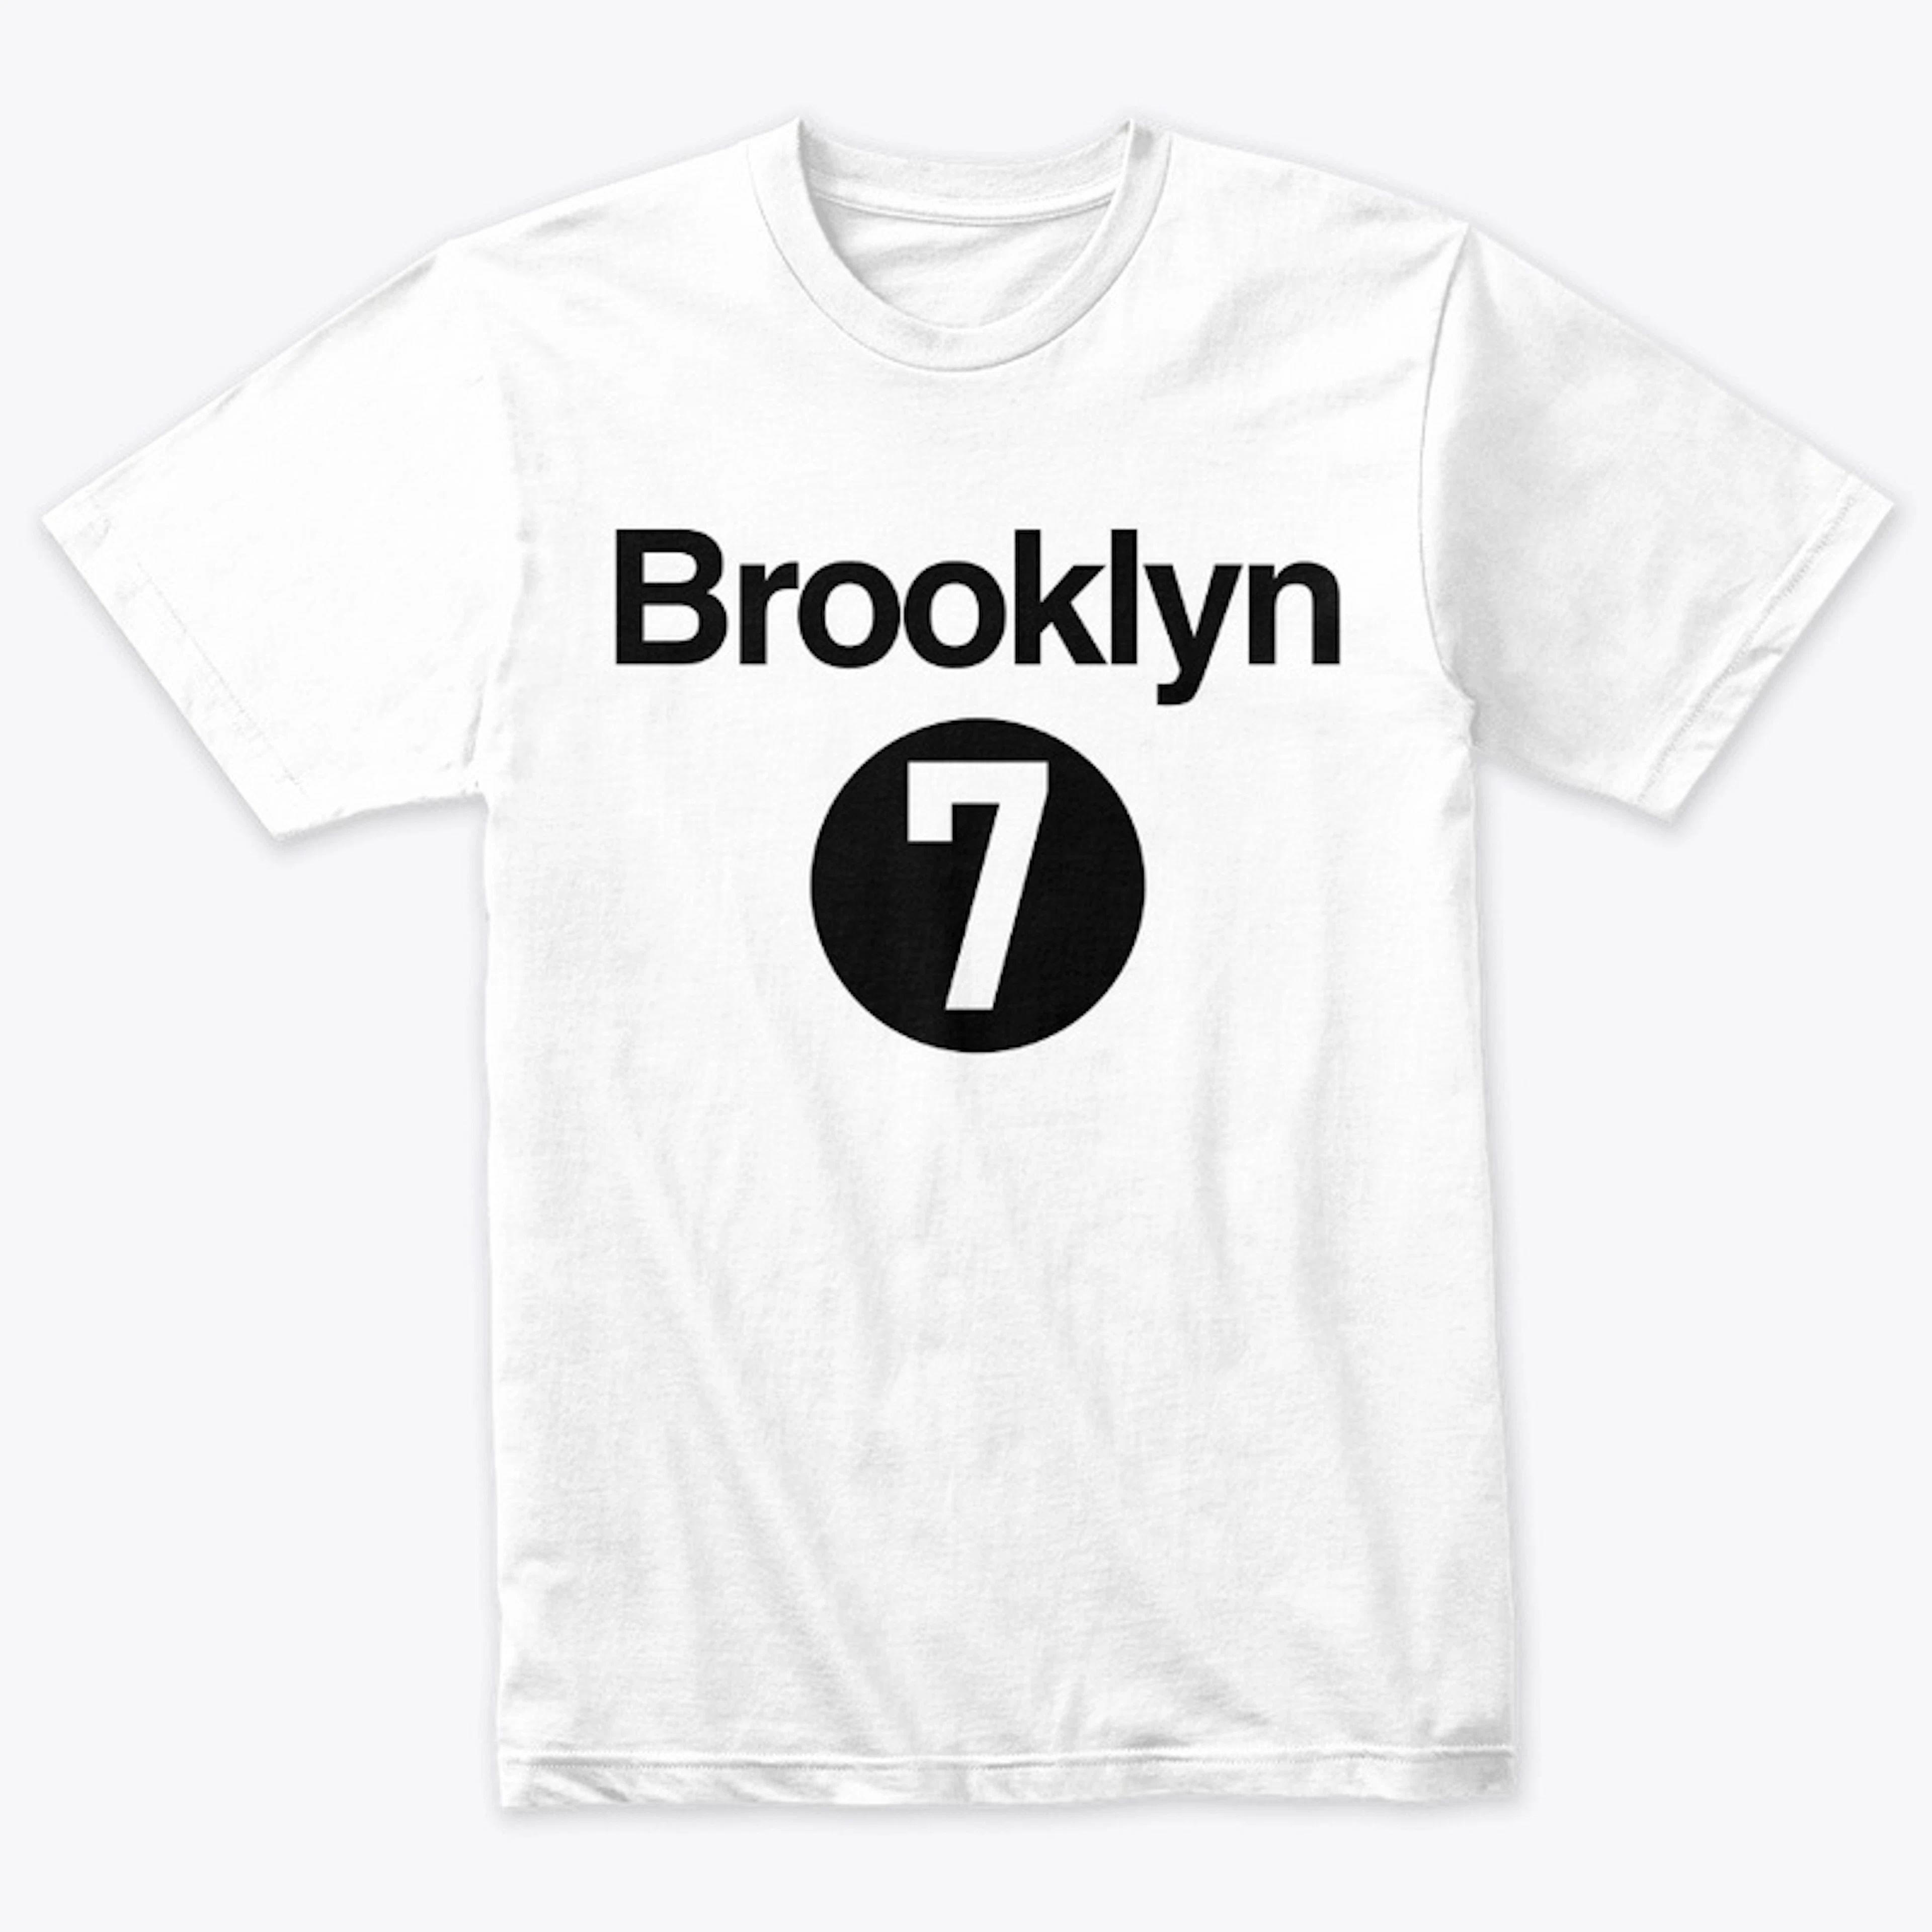 Brooklyn #7 Earned | Ninety4feet